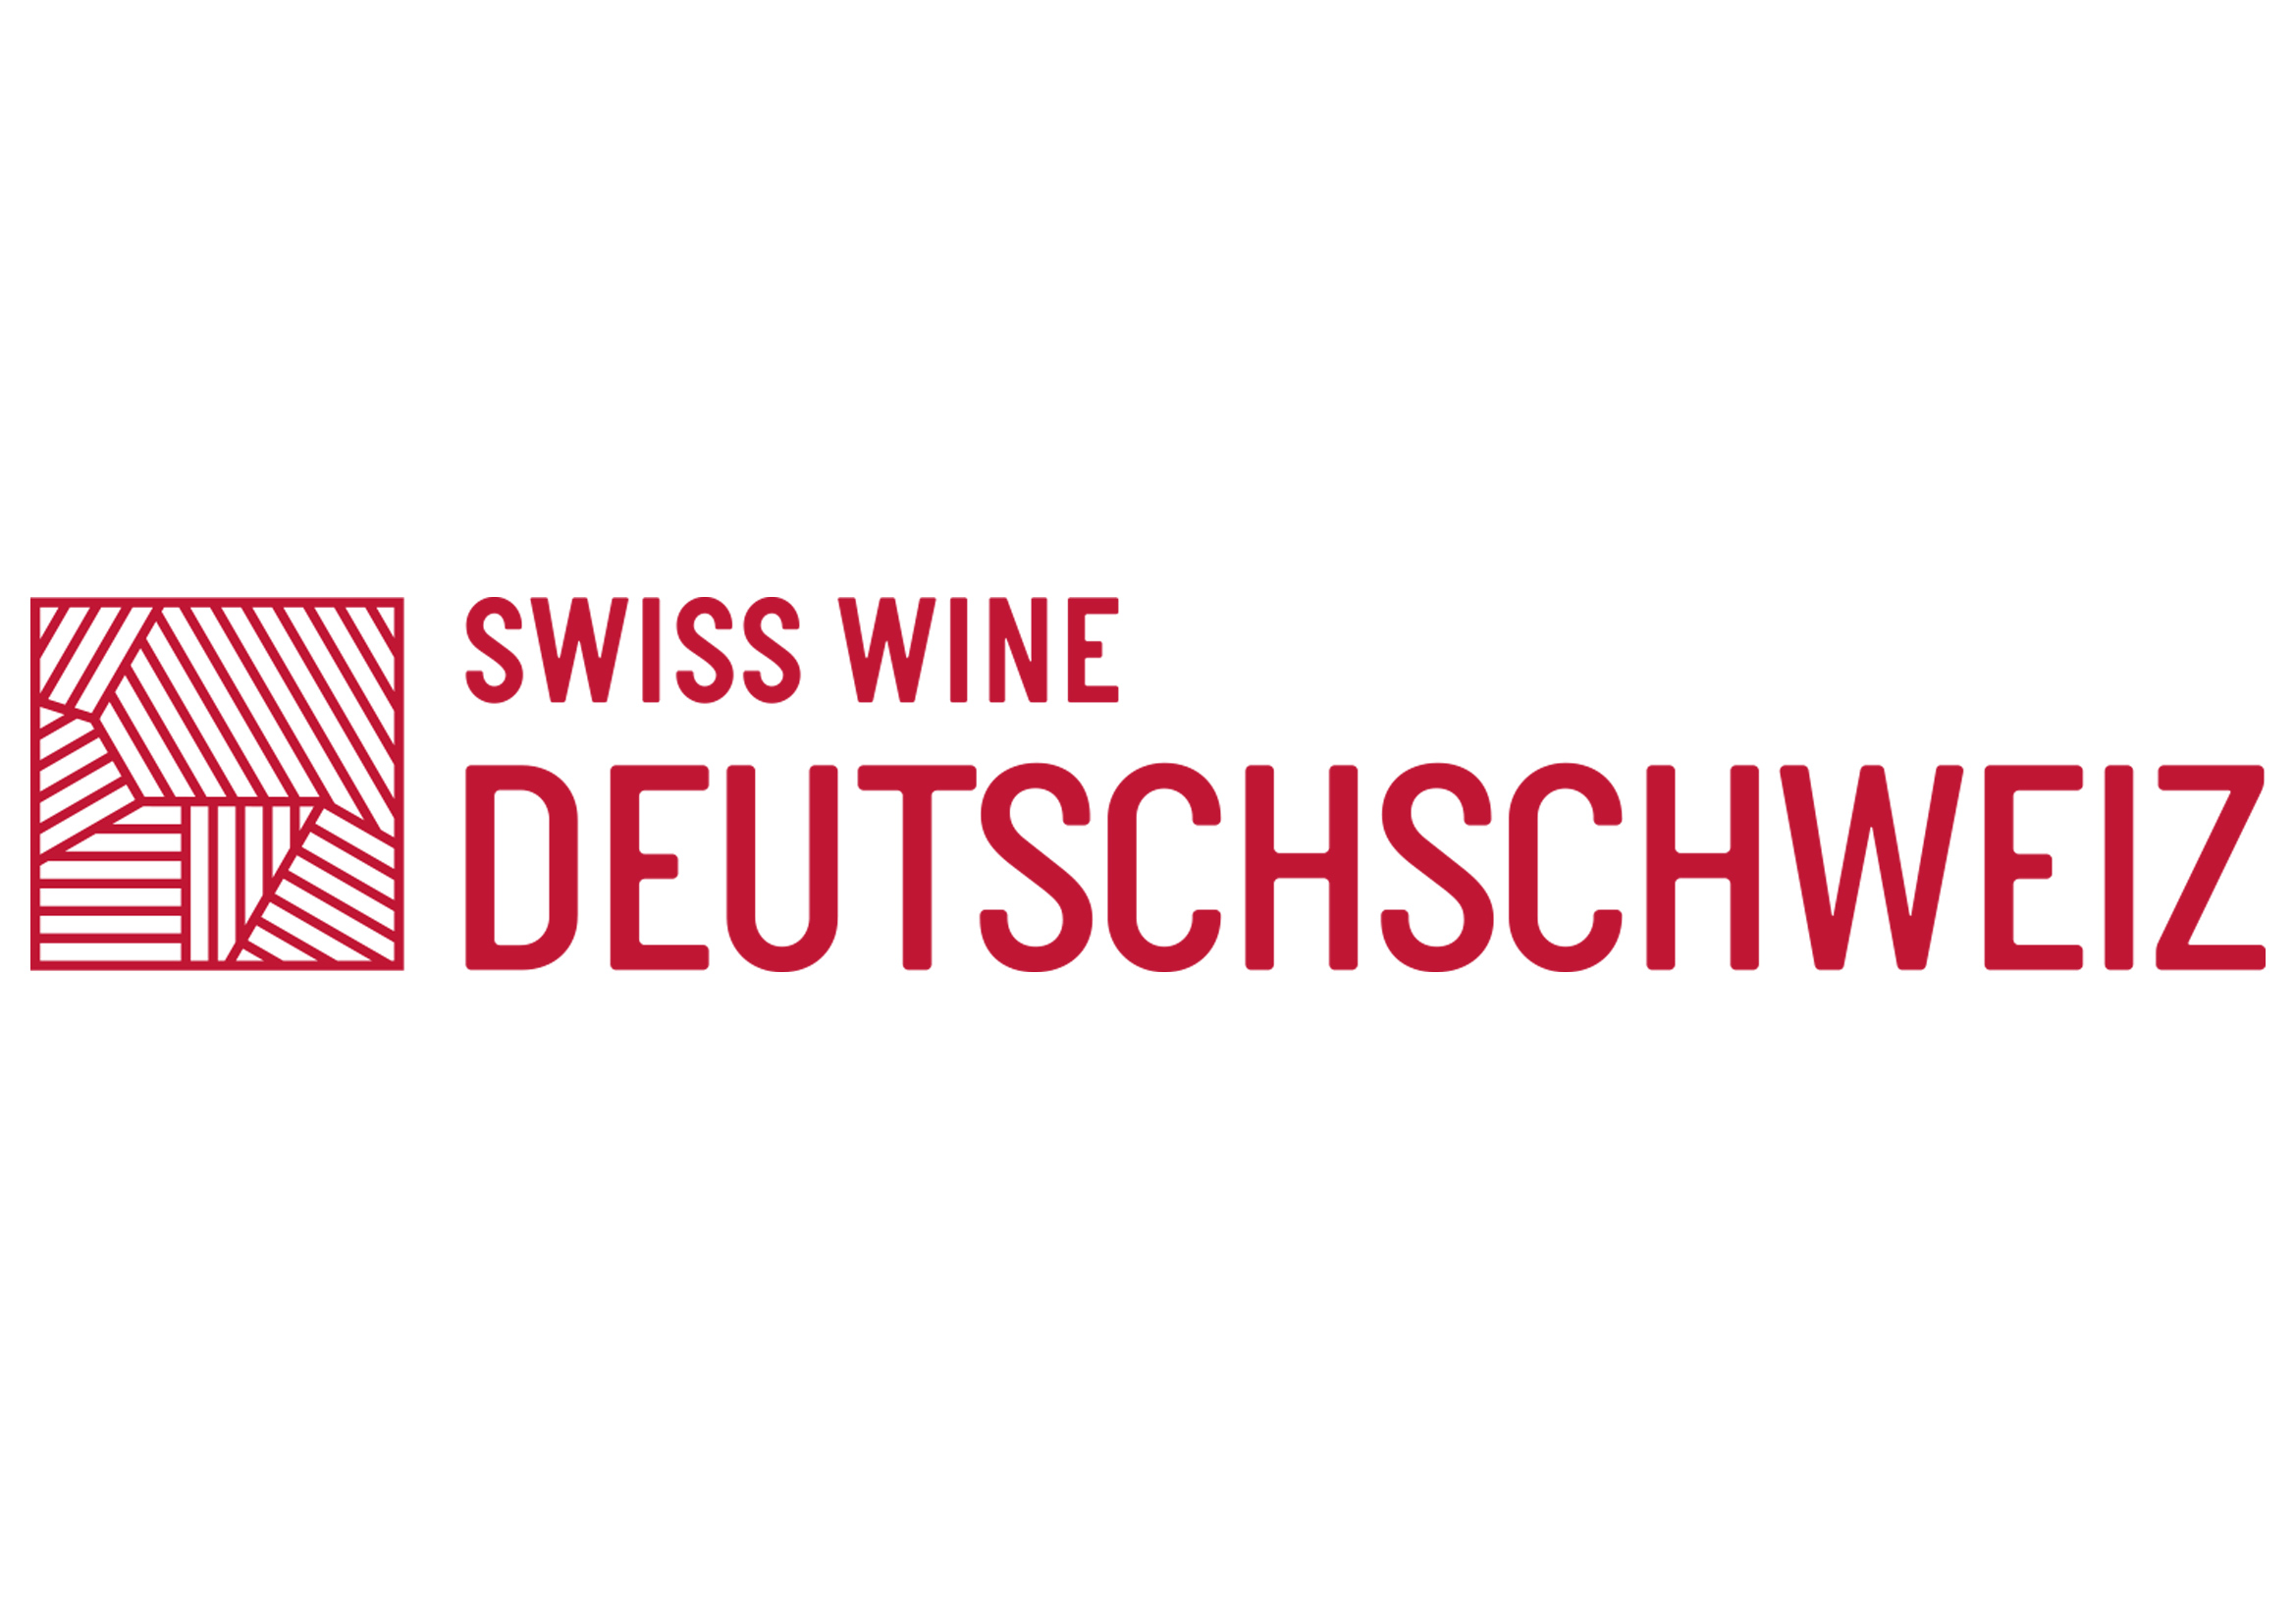 Swiss wine deutschschweiz